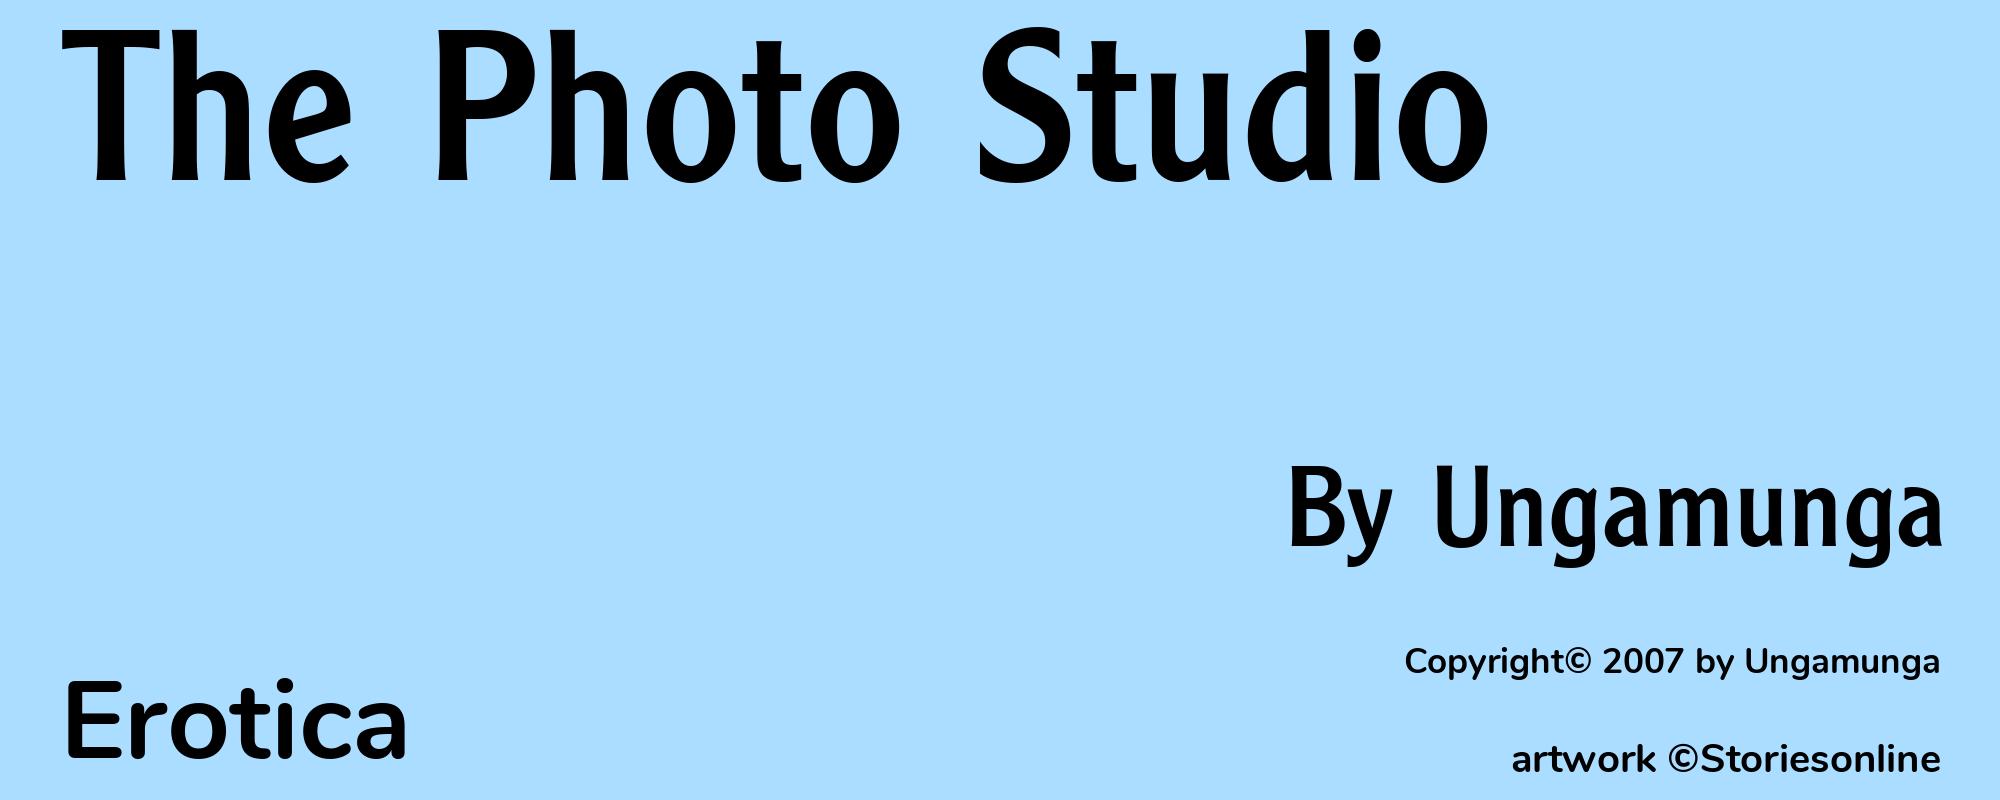 The Photo Studio - Cover